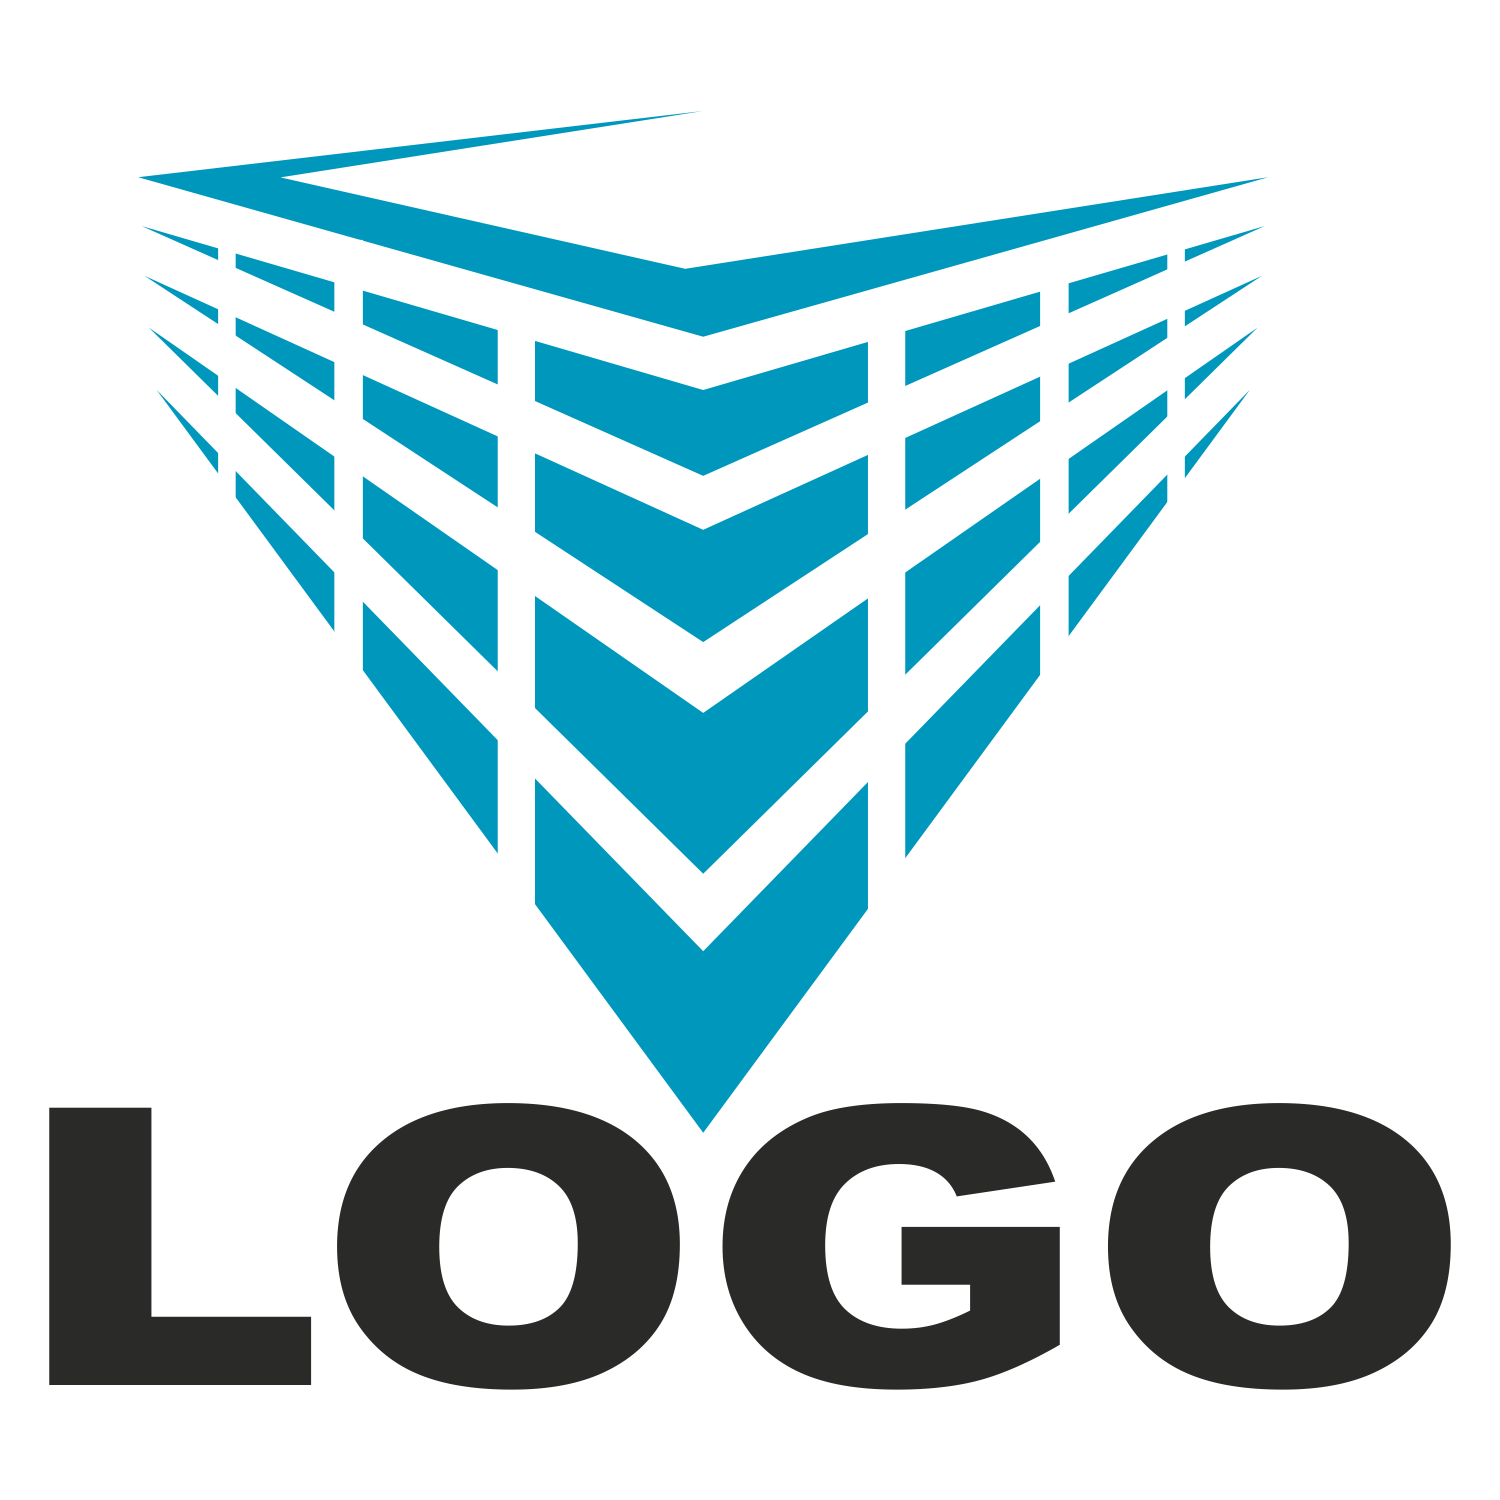 Vector for free use: Logo construction company.